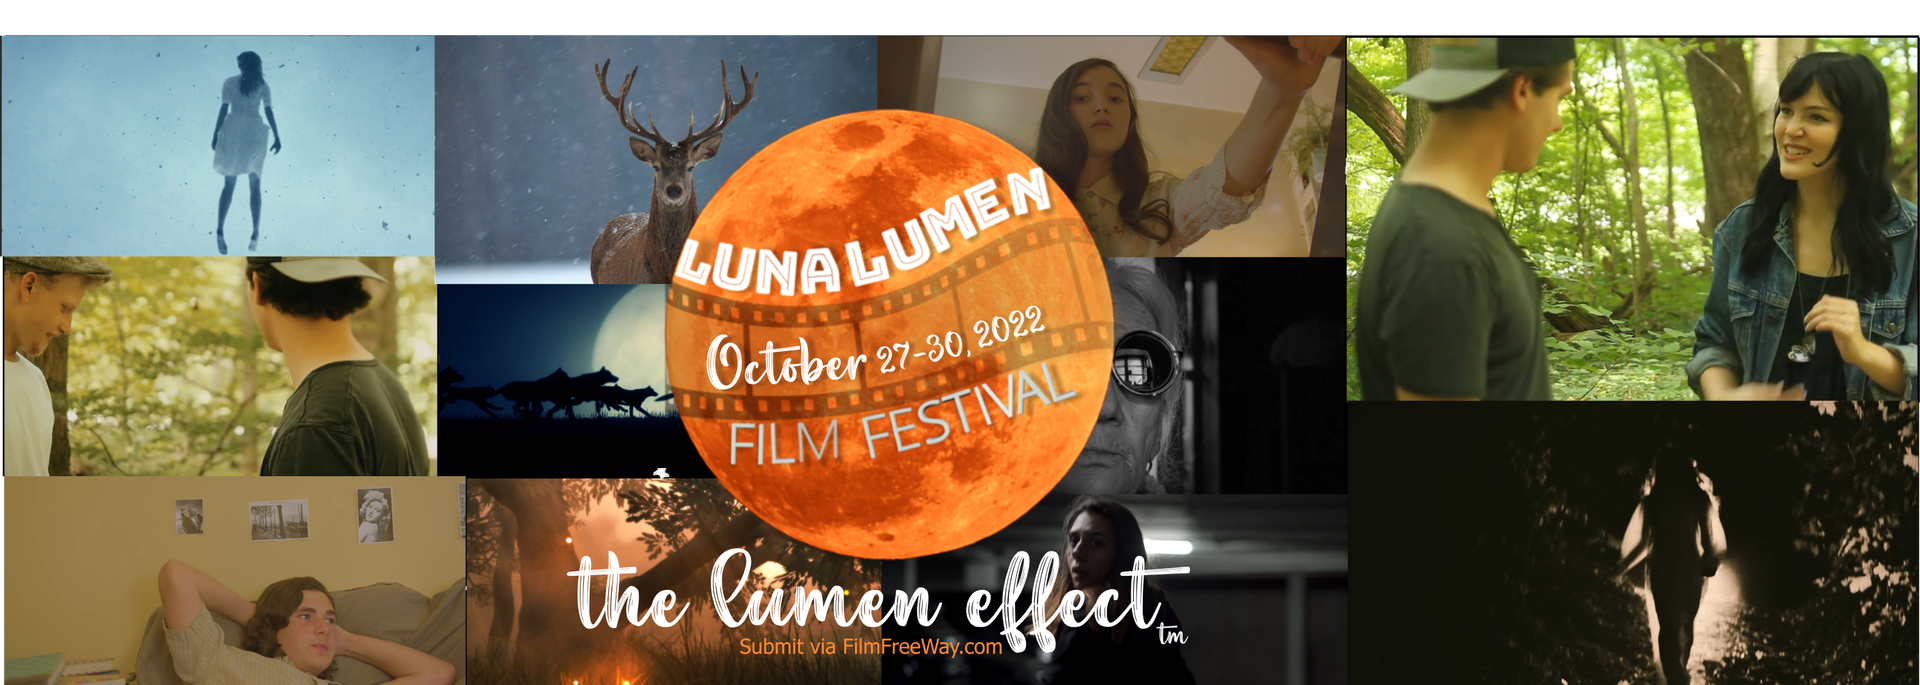 Luna Lumen Film Festival channel